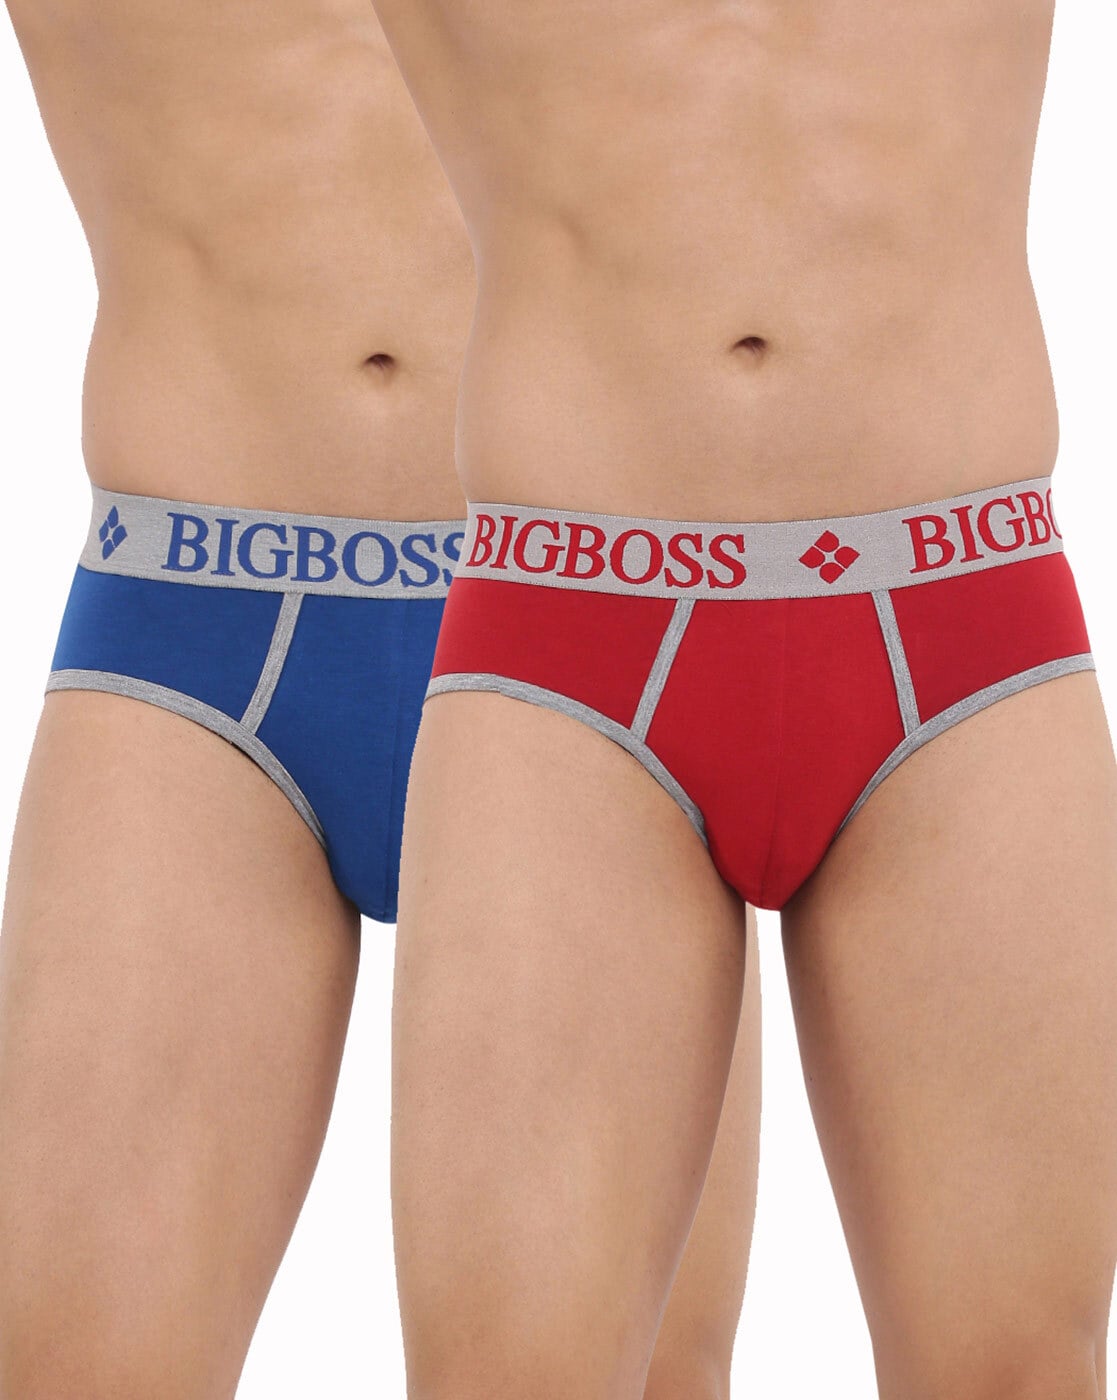 Buy DOLLAR BIGBOSS Men's Assorted Pack of 2 Cotton Briefs